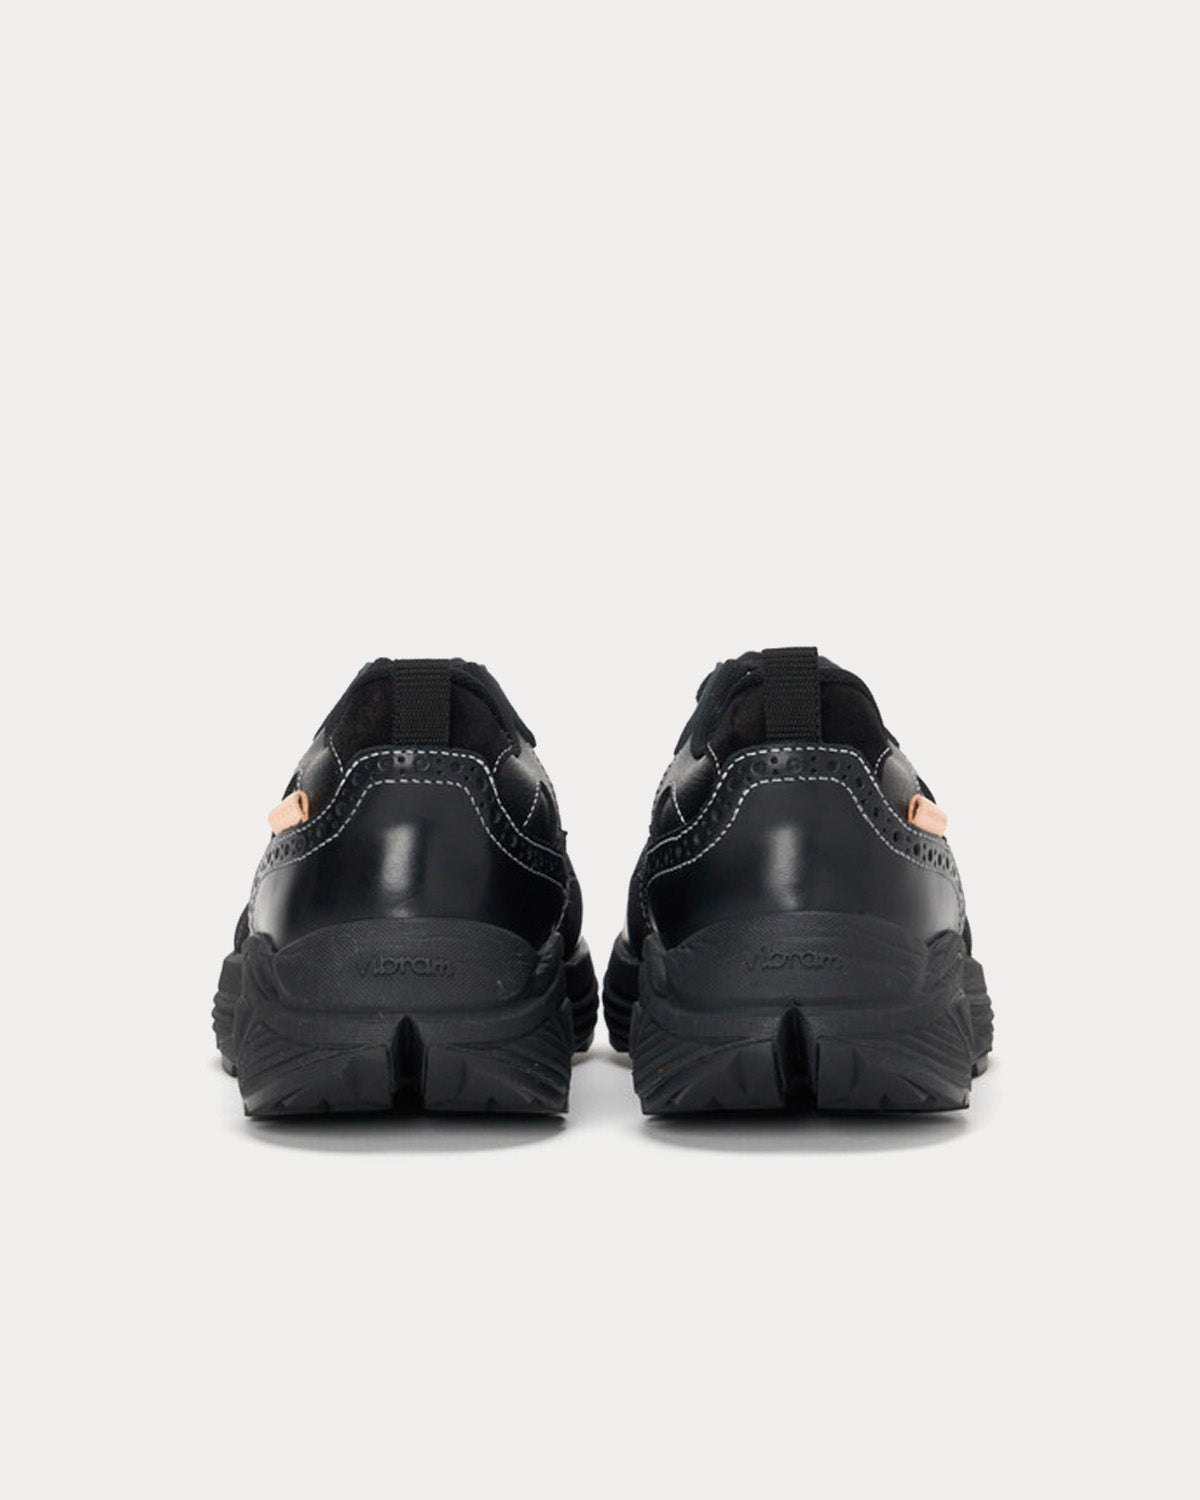 Hender Scheme - Polar Black / White Low Top Sneakers